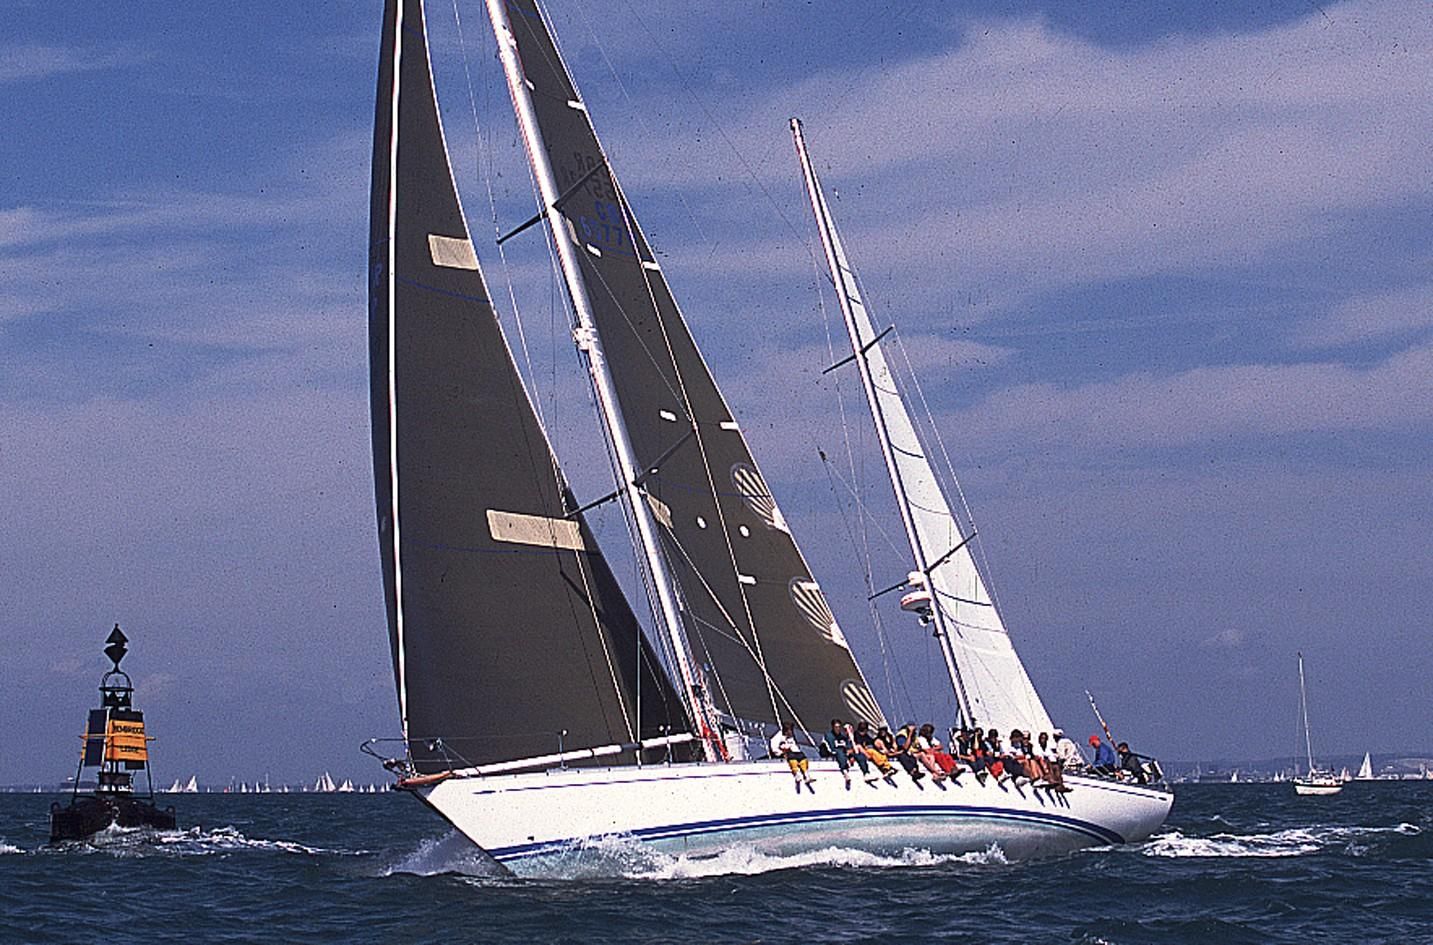 ct 65 sailboat